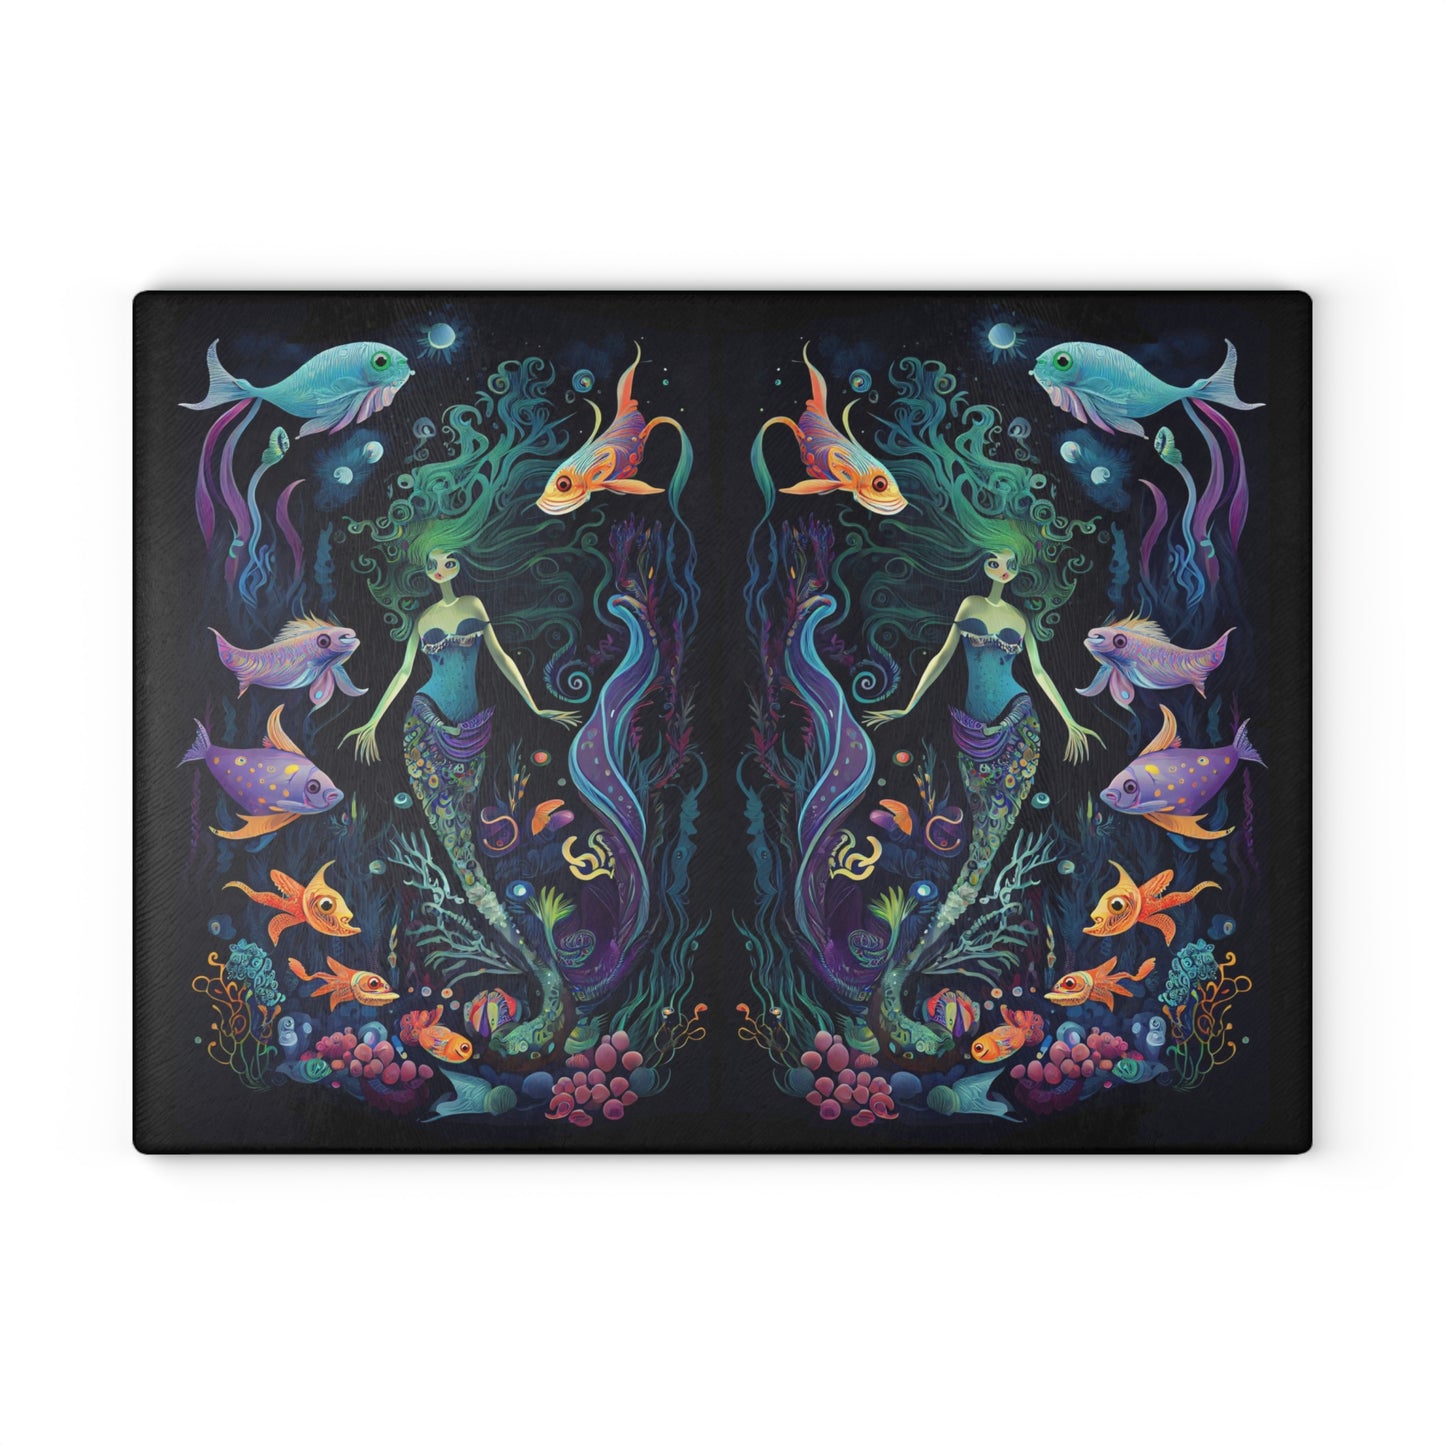 Mermaid Garden Mermaidcore Fairycore Tempered Glass Cutting Board 11x15